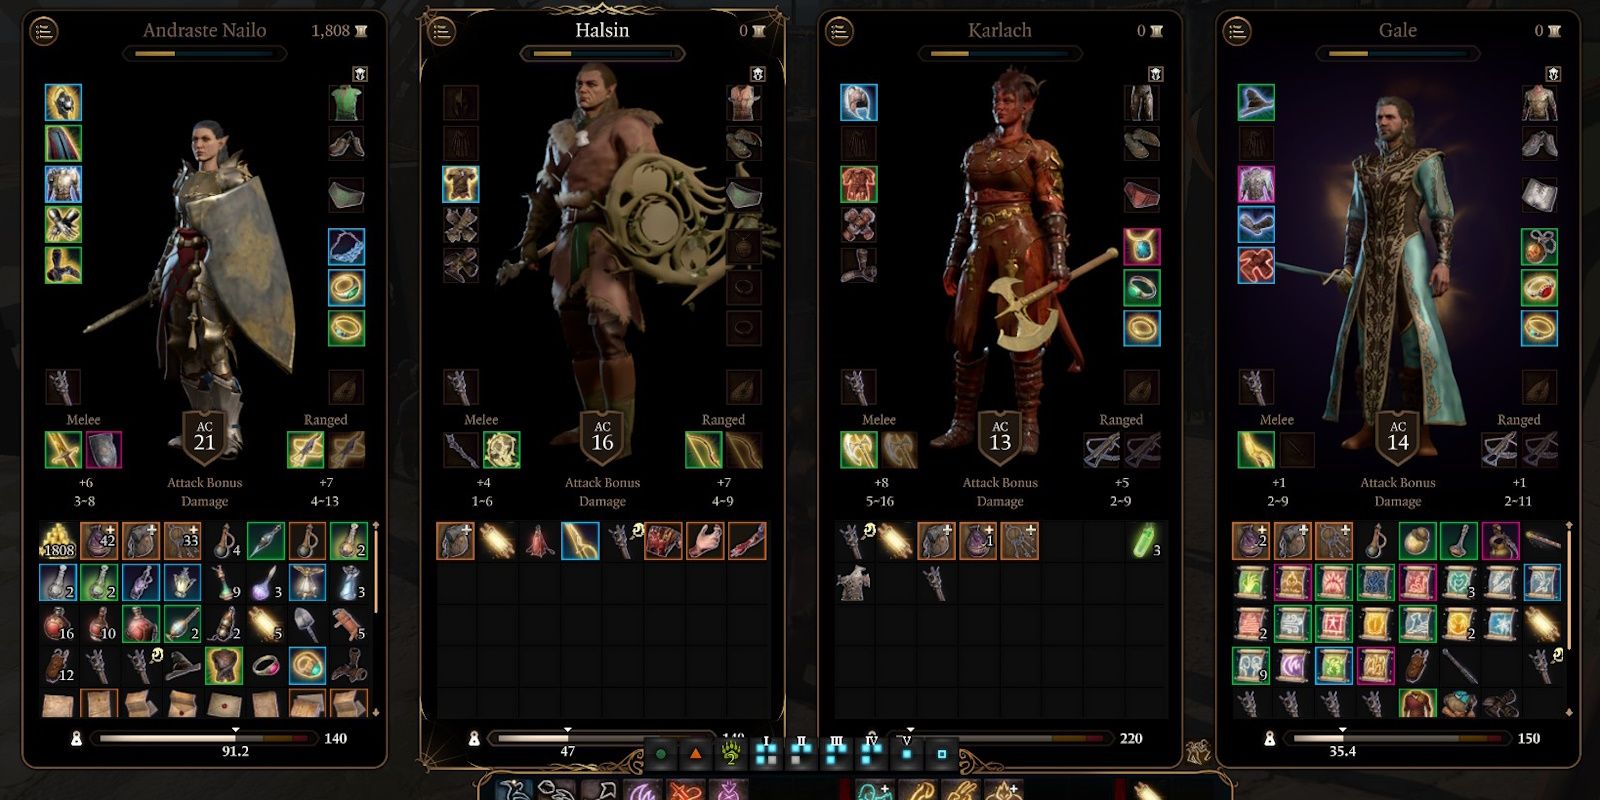 Screenshot showing Baldur's Gate 3 party members each having different gear from their initial start.